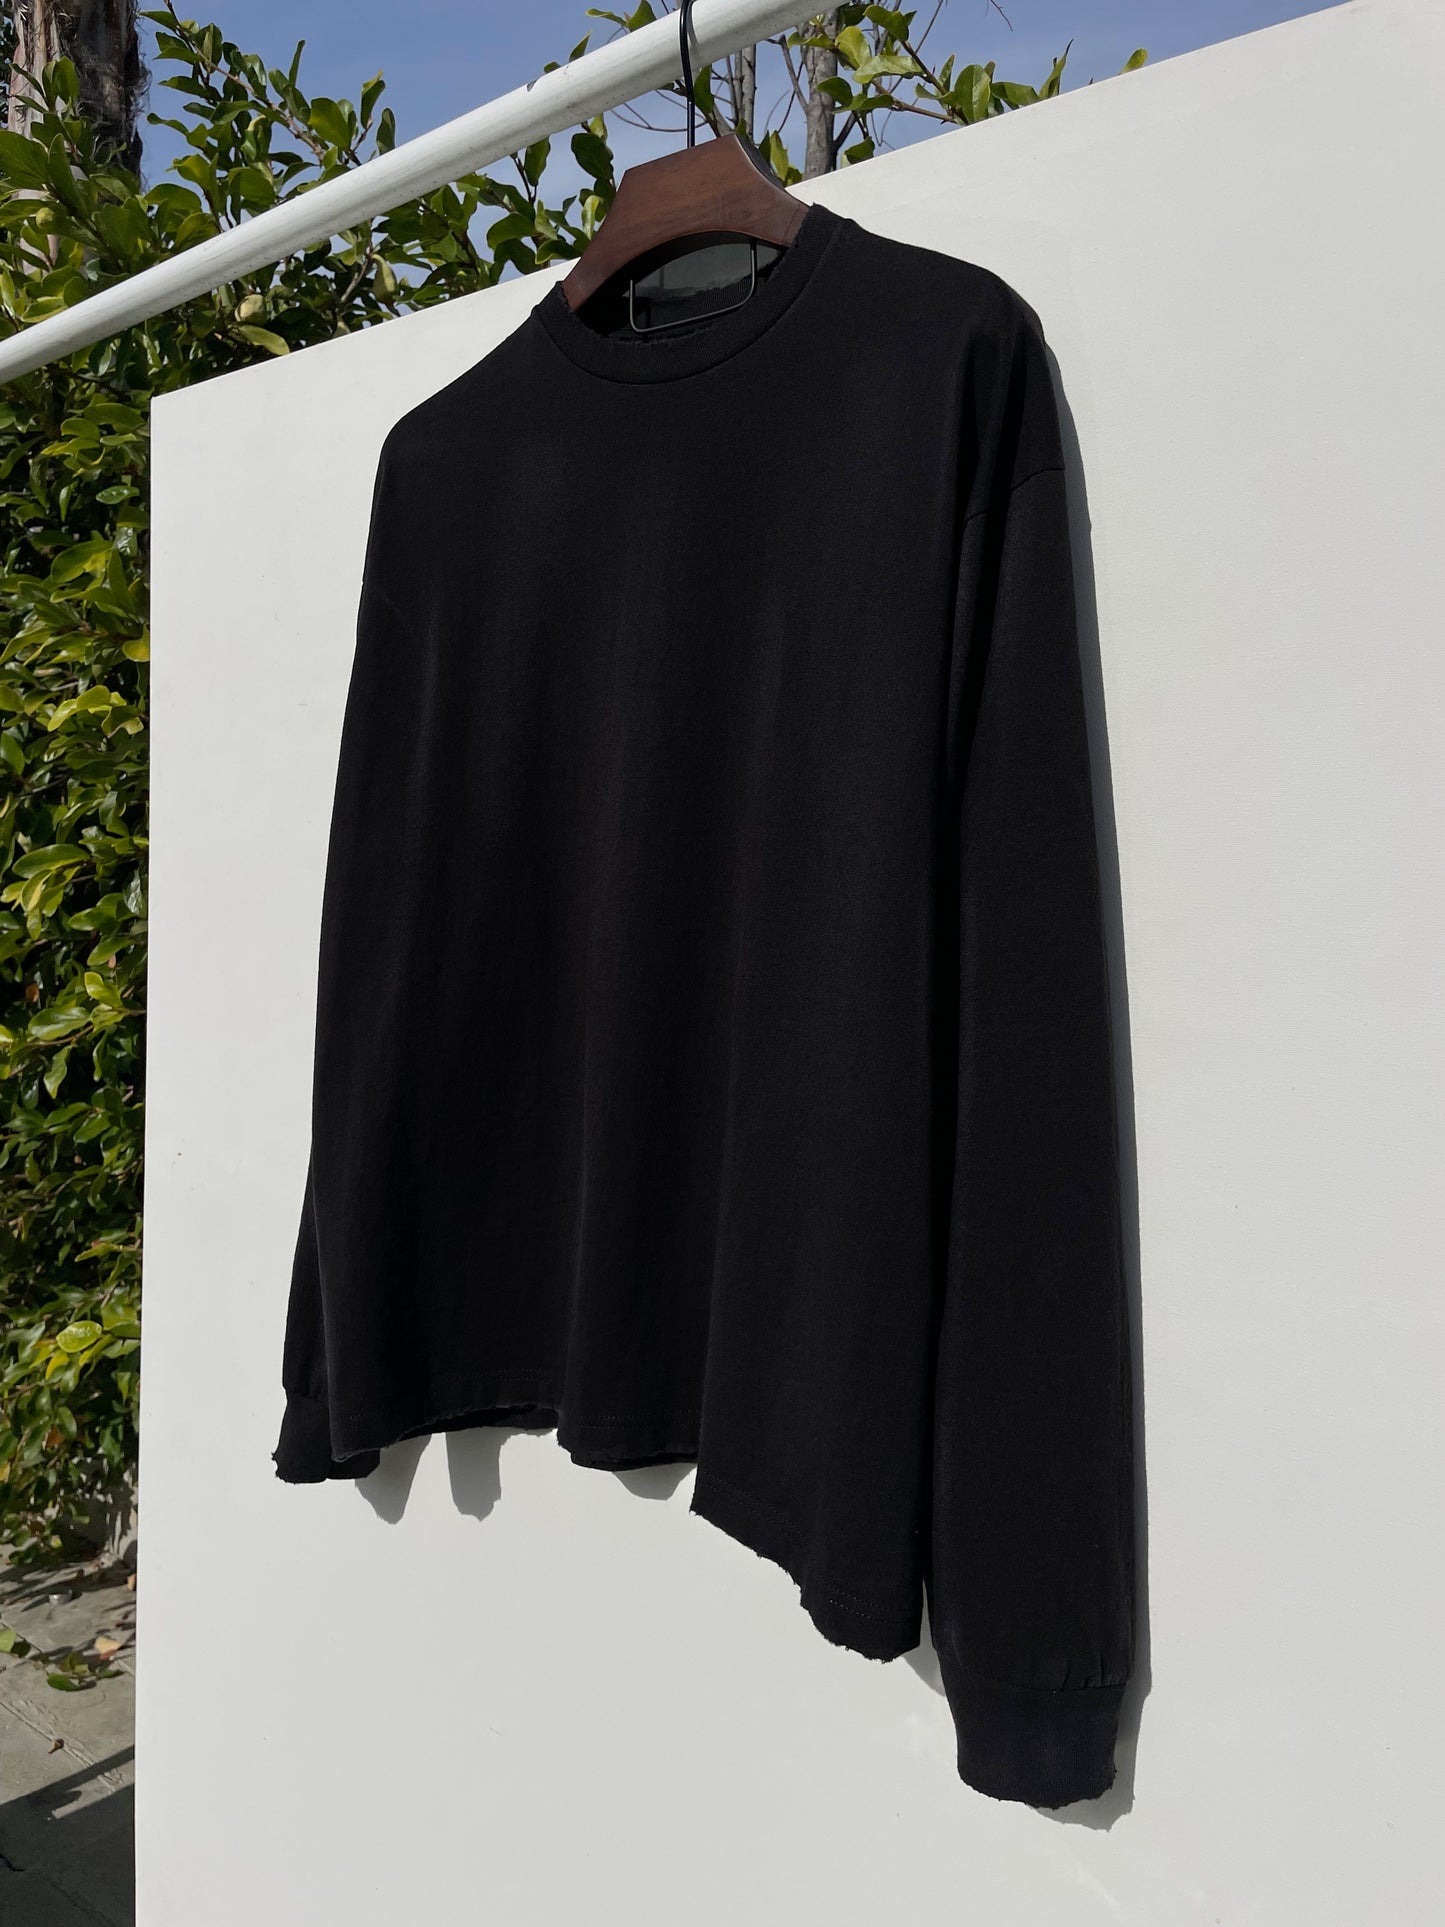 Sixelar distressed Long sleeve Black blank t-shirt. hanger